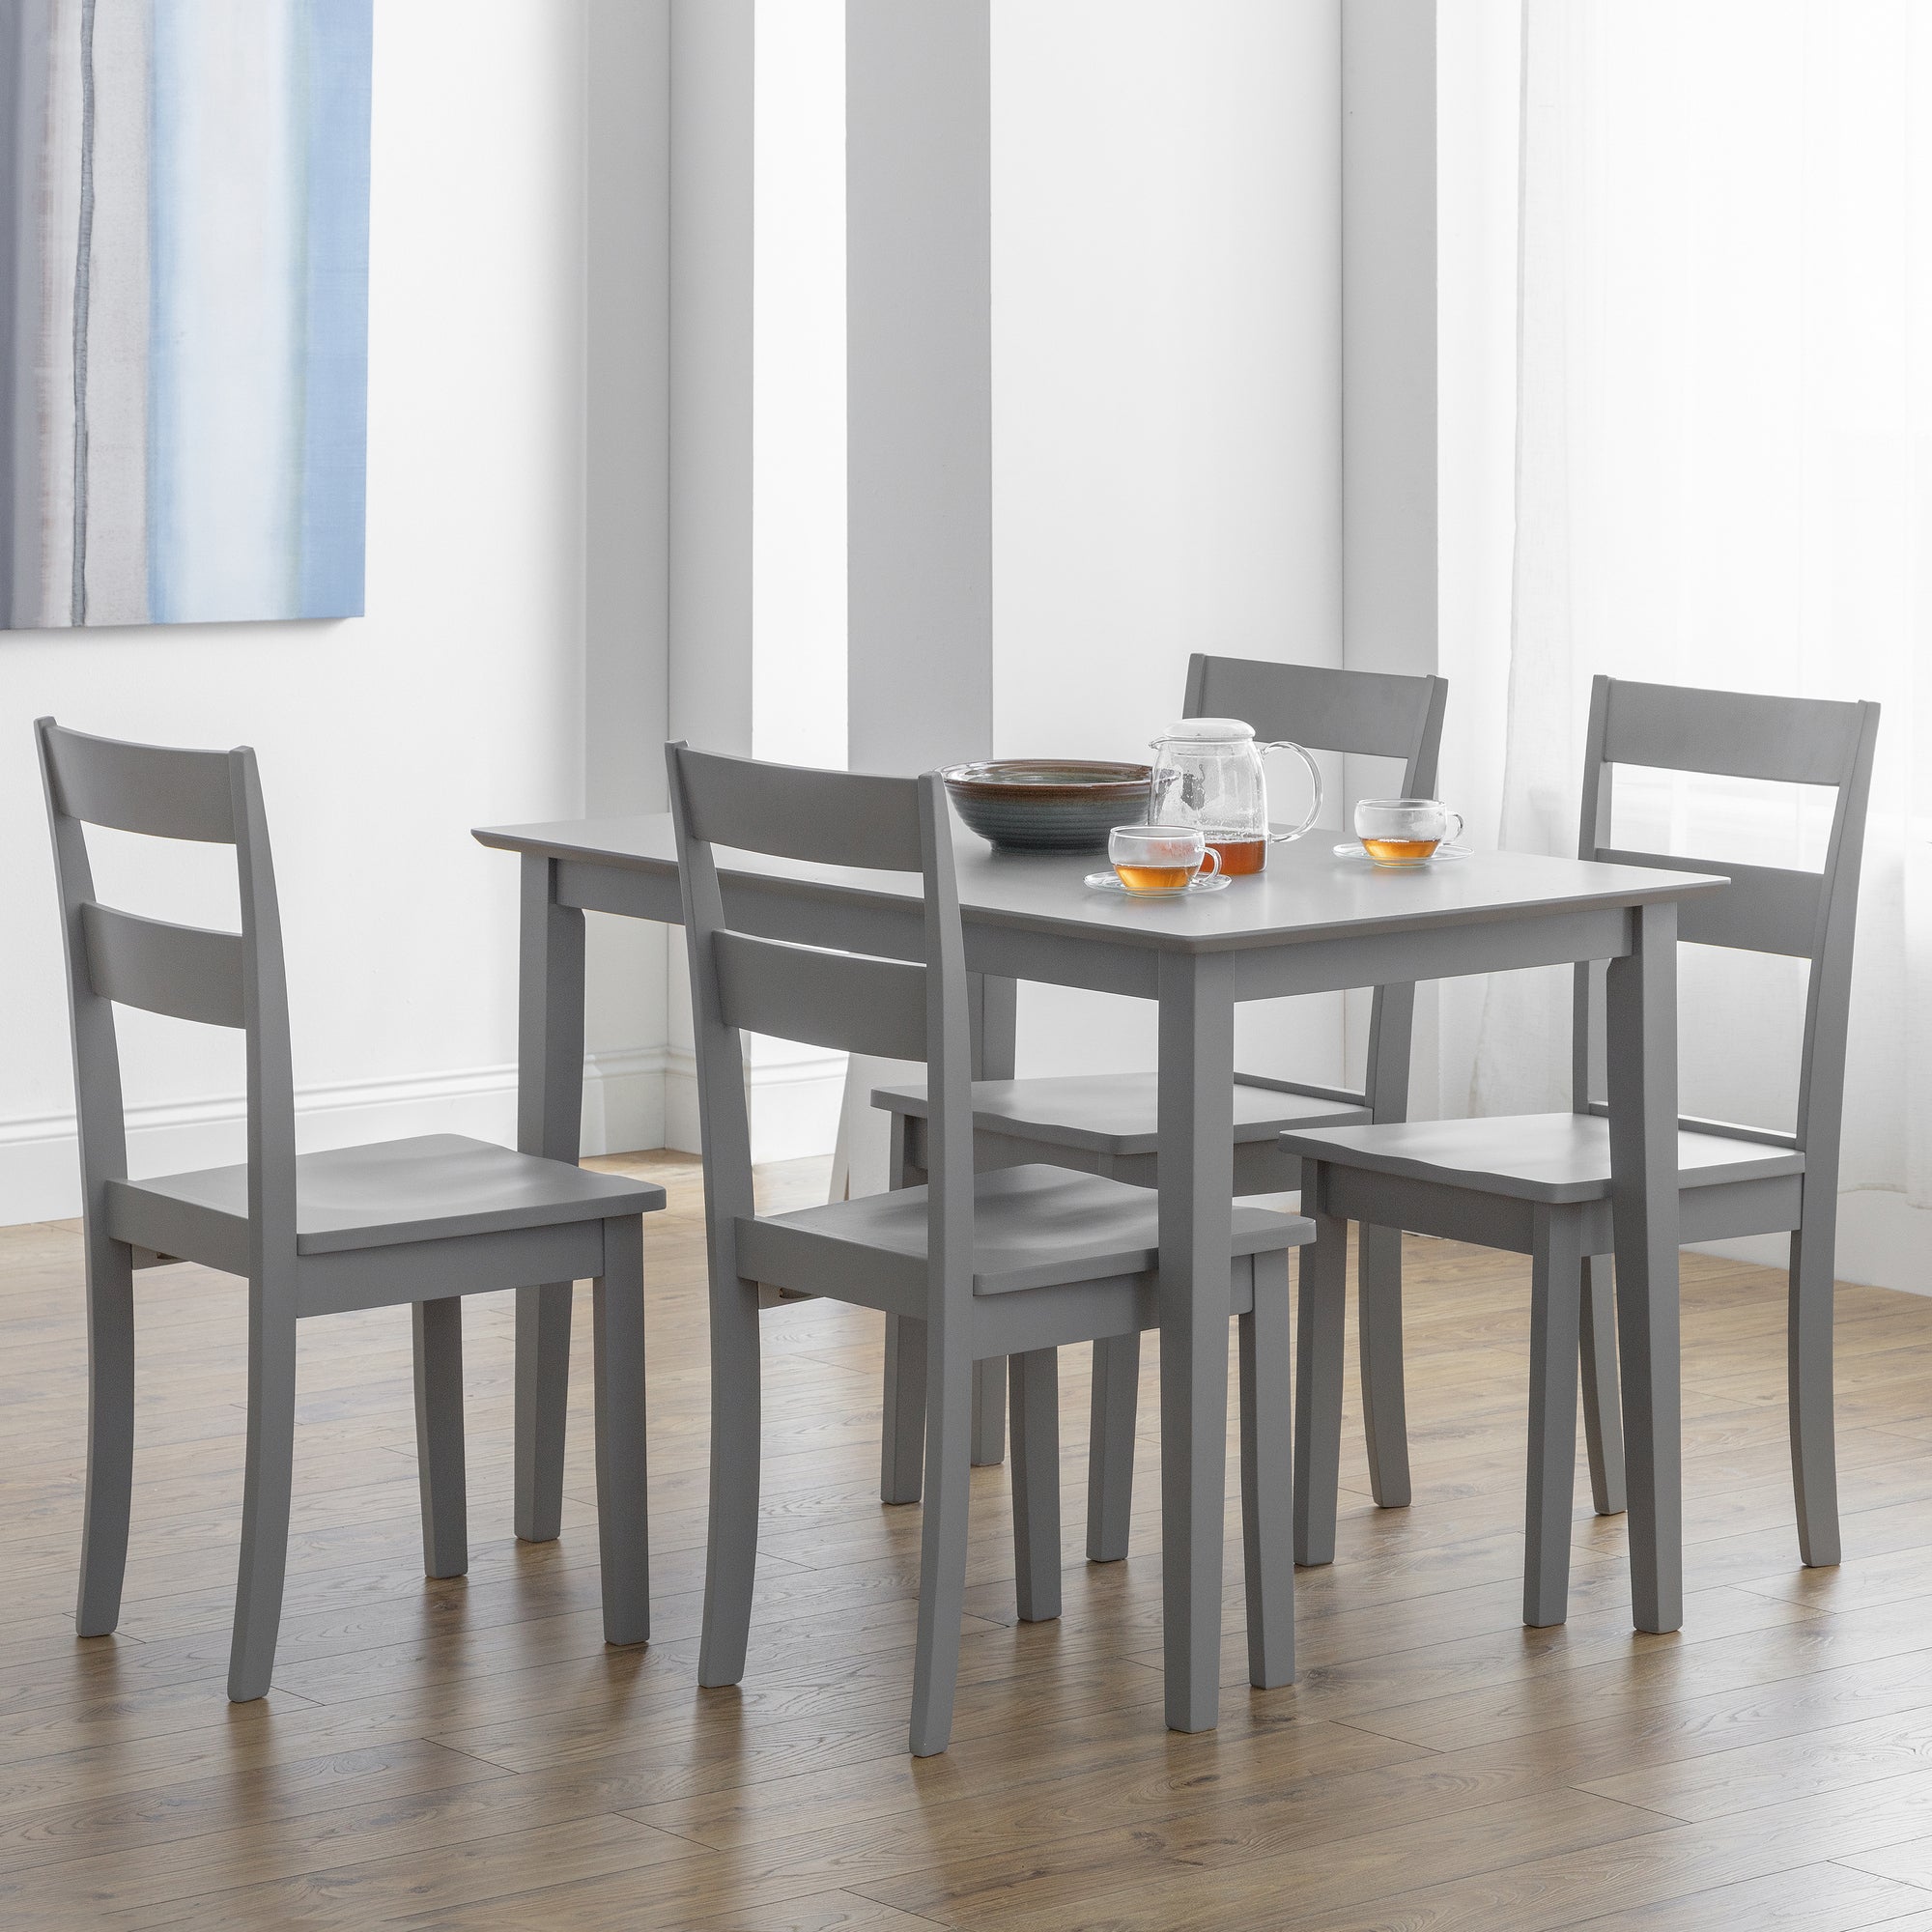 Photos - Sofa Julian Bowen Kobe Rectangular Small Dining Table with 4 Chairs, Grey Grey 